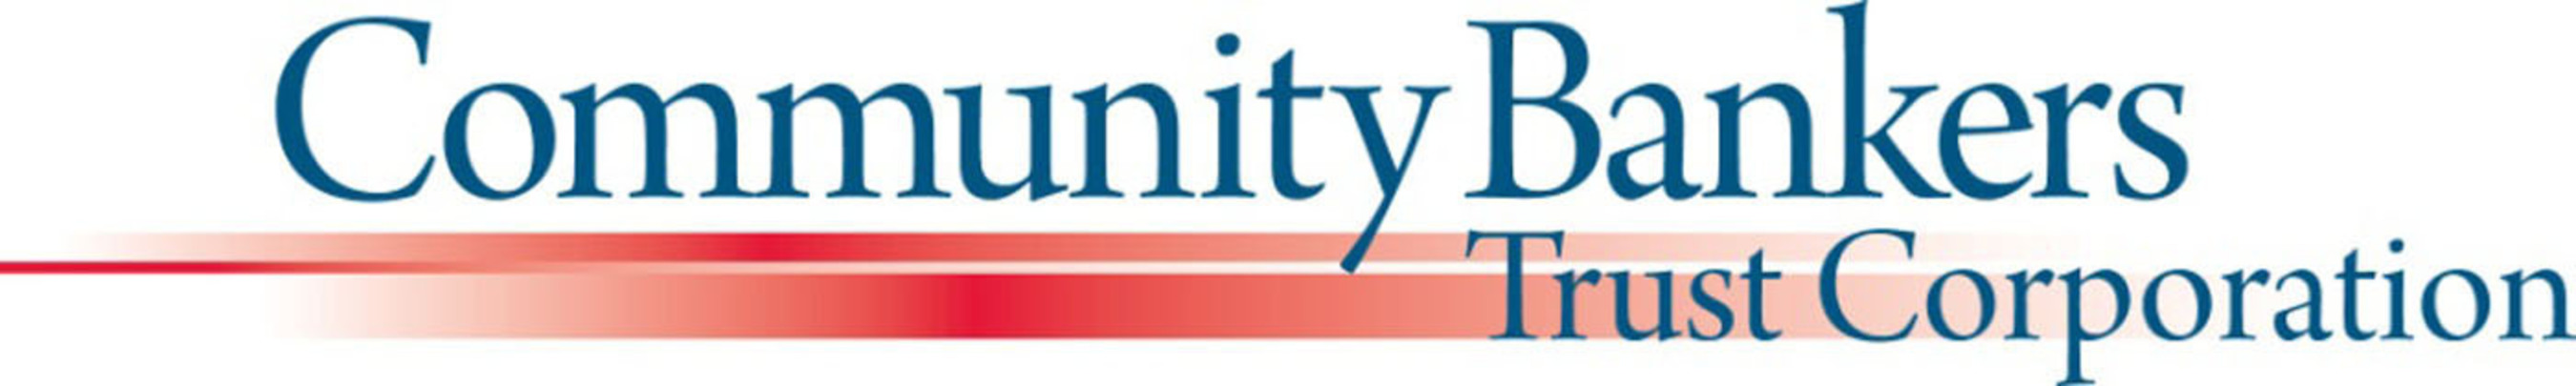 Community Bankers Trust Corporation logo.